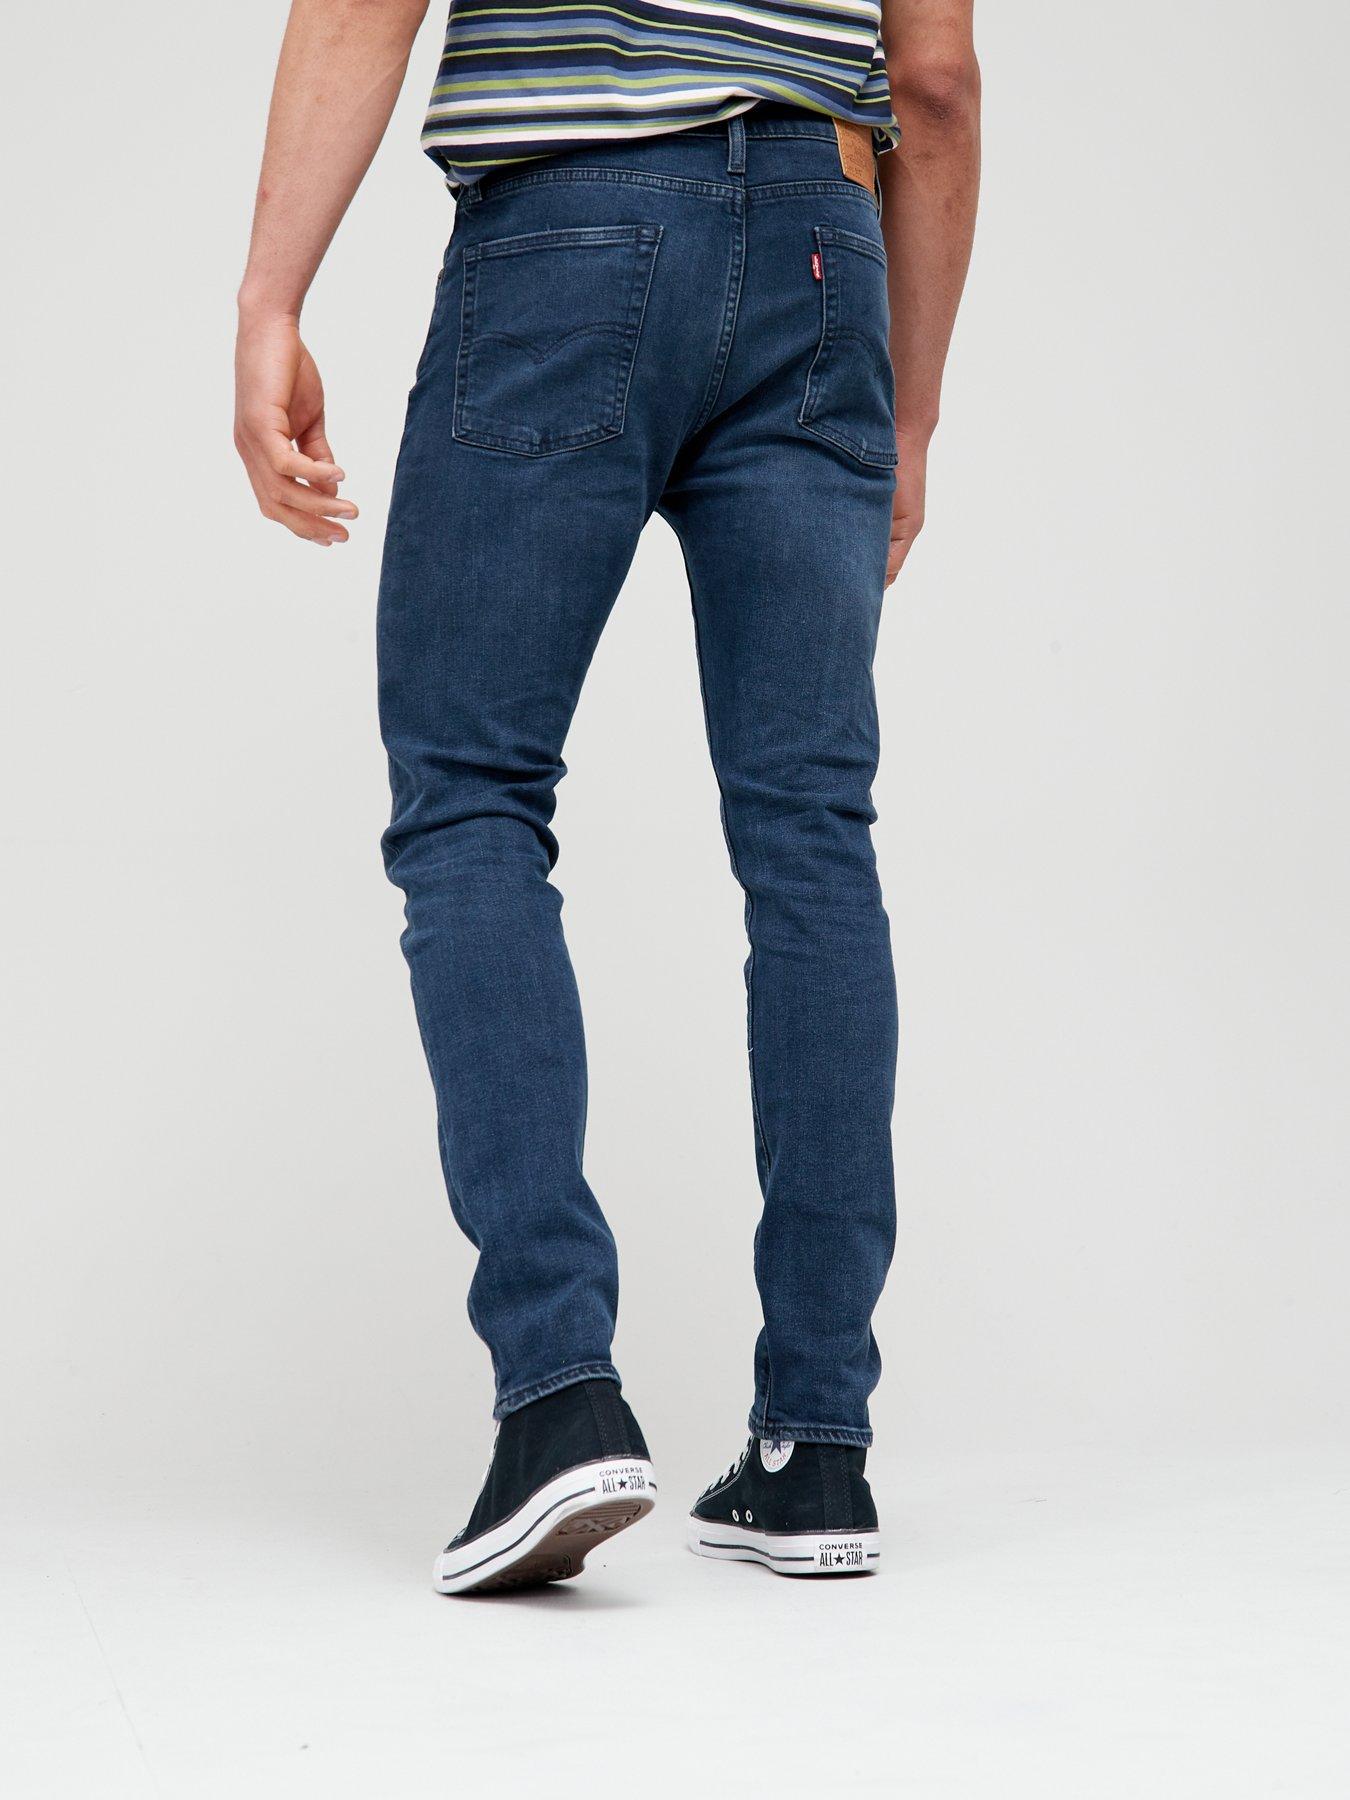 Levi's 510™ Skinny Fit Jeans - Blue/Black 